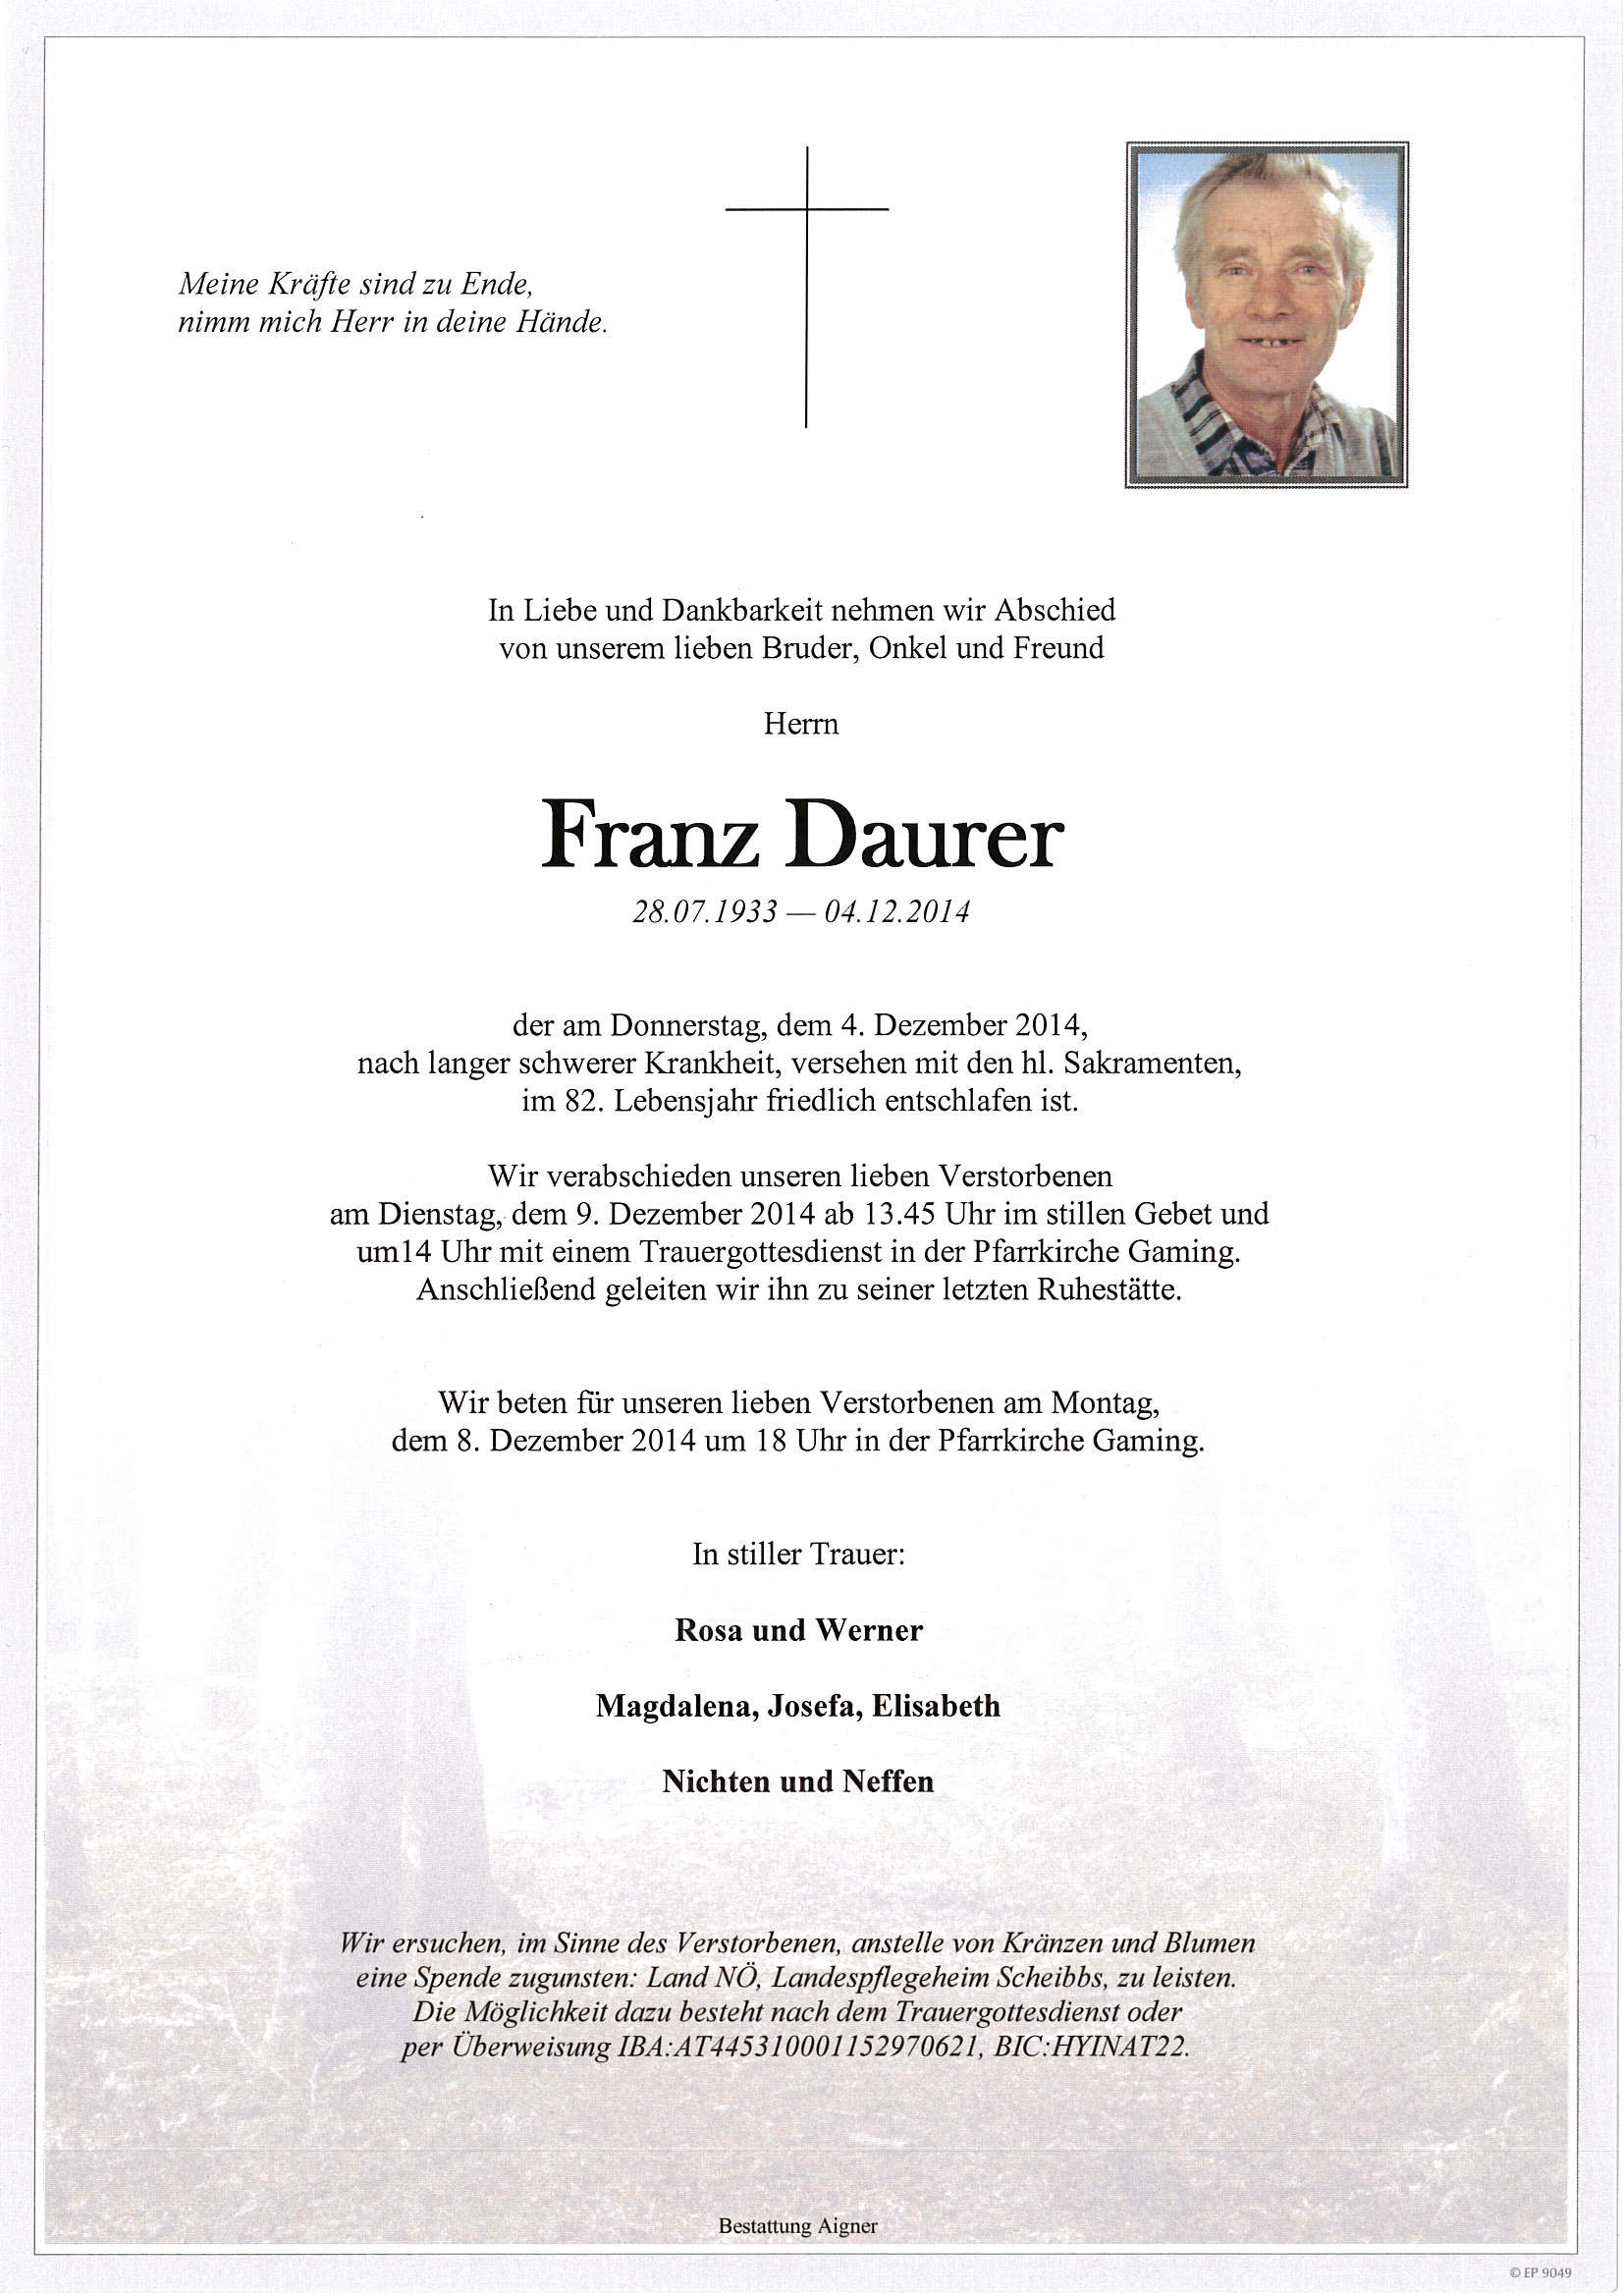 Franz Daurer